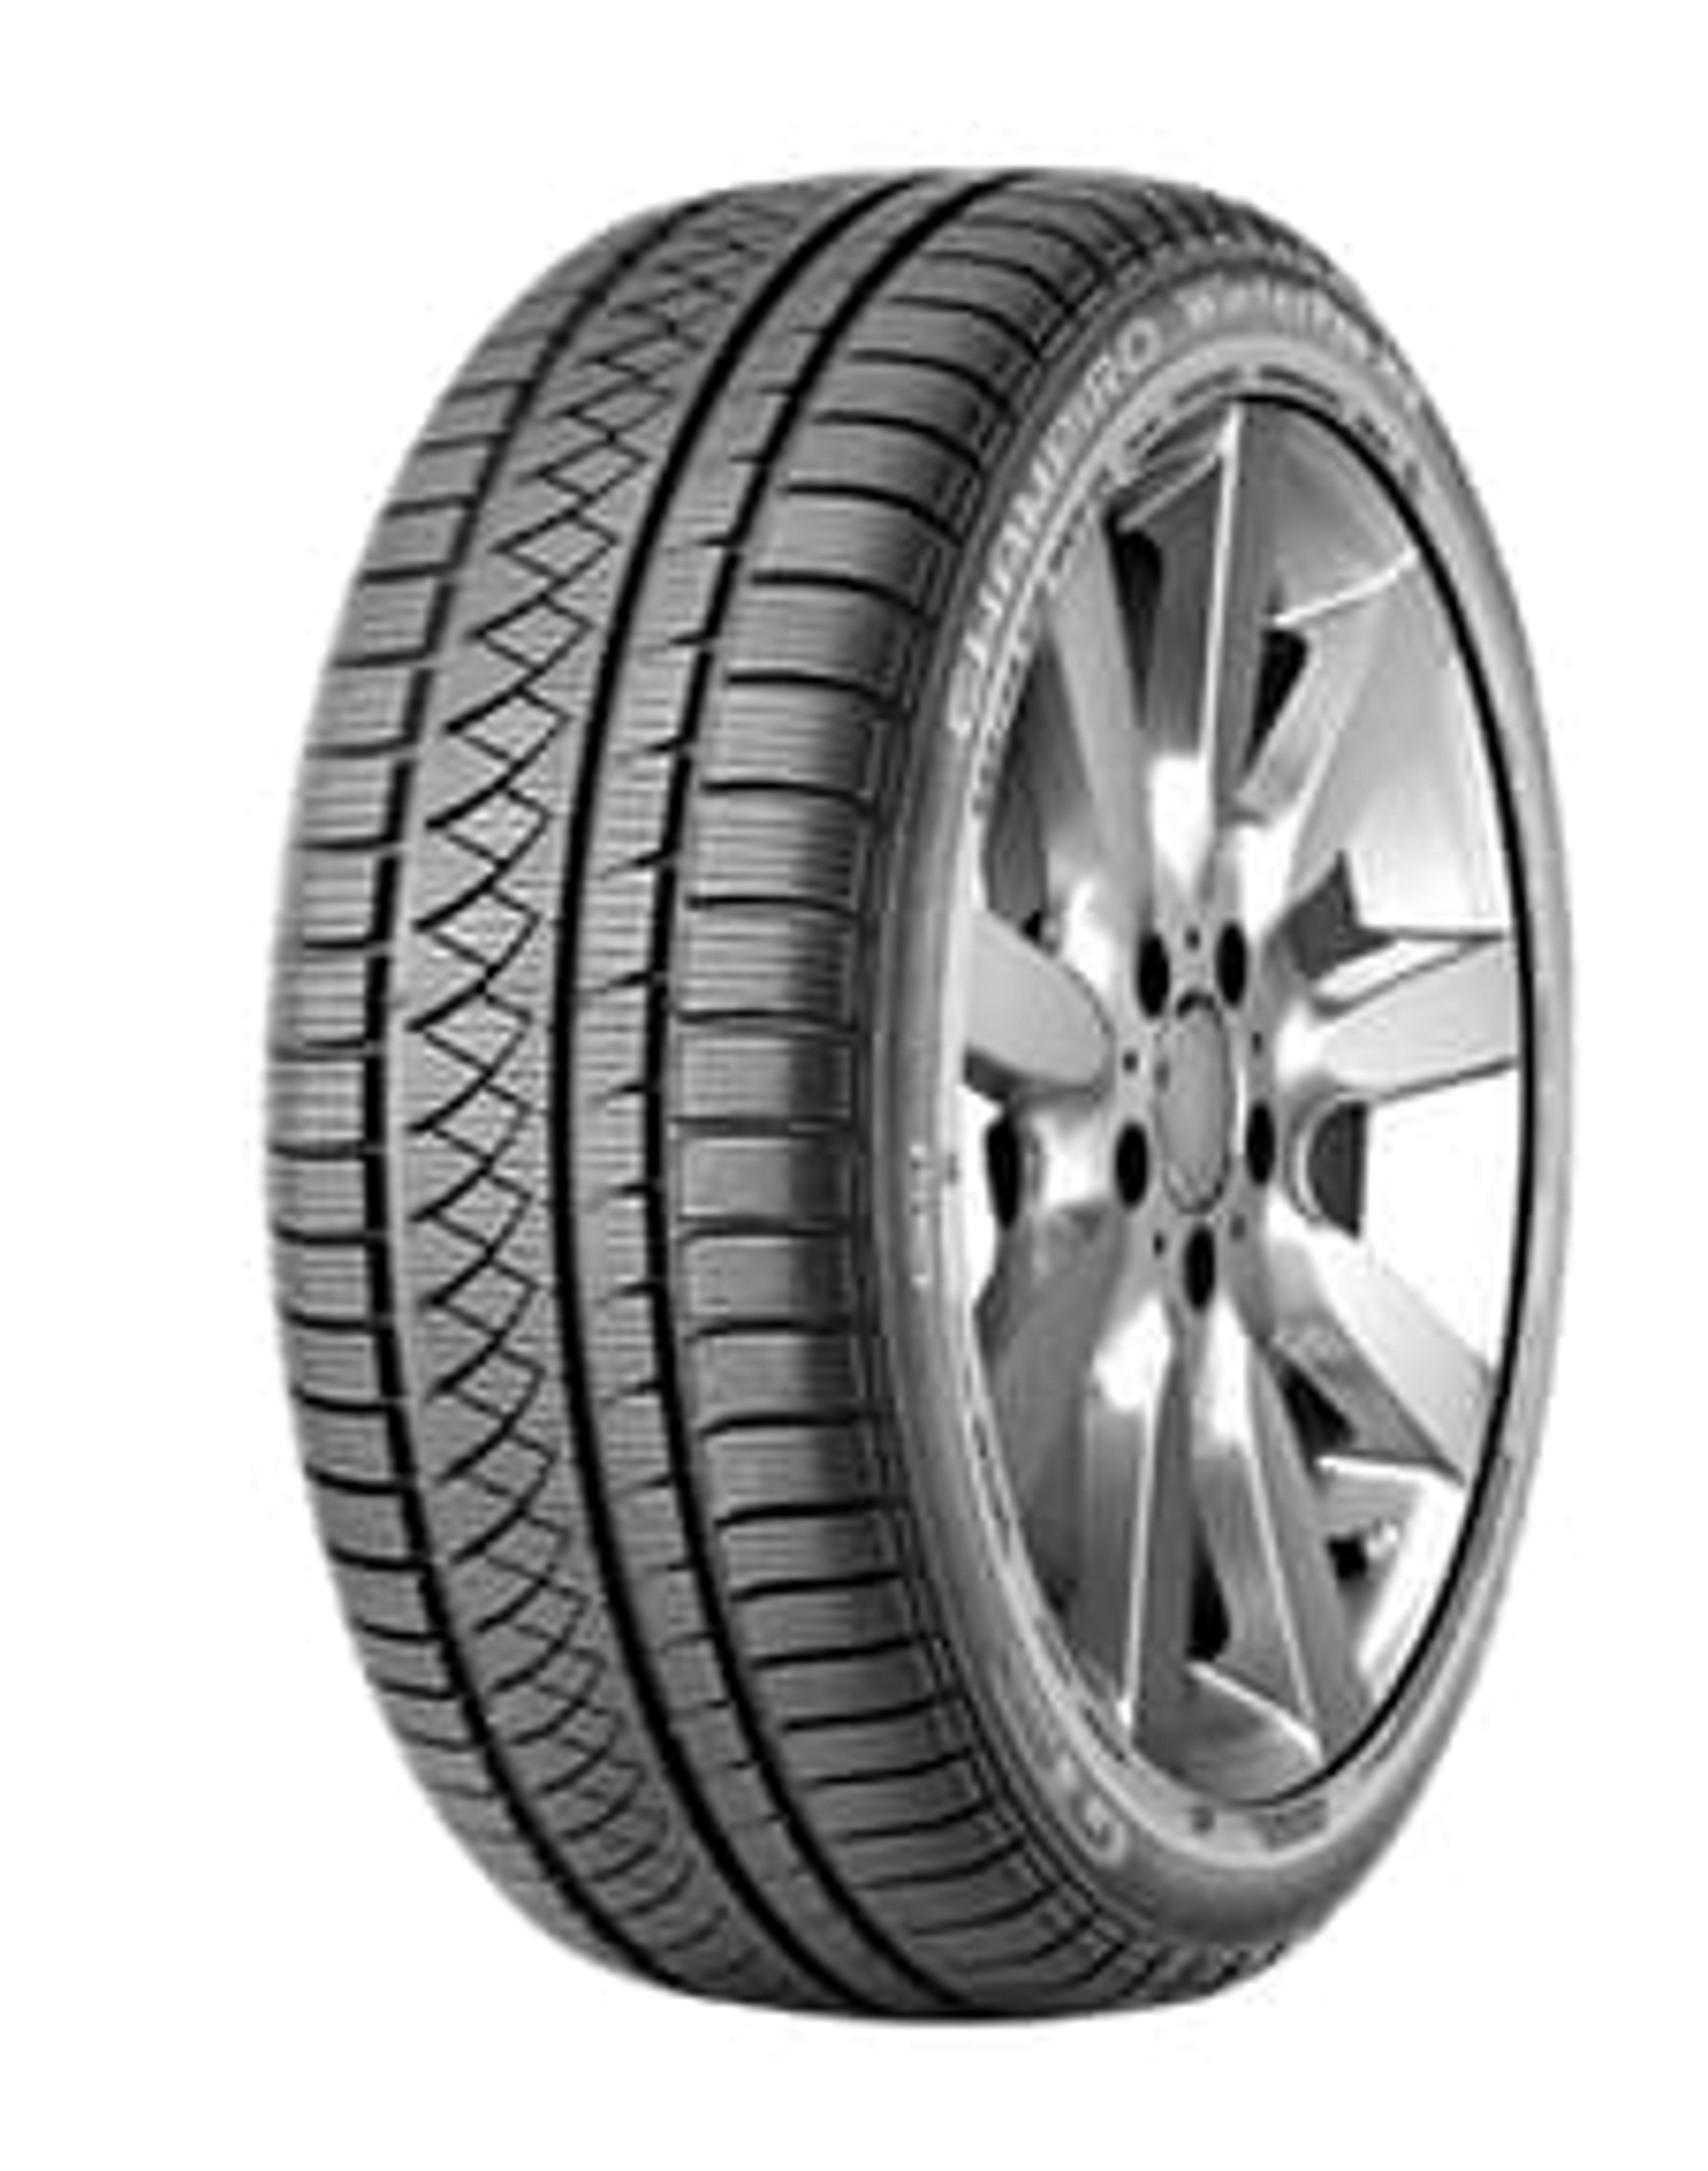 Buy GT Radial Champiro HP Online SimpleTire Winterpro Tires 